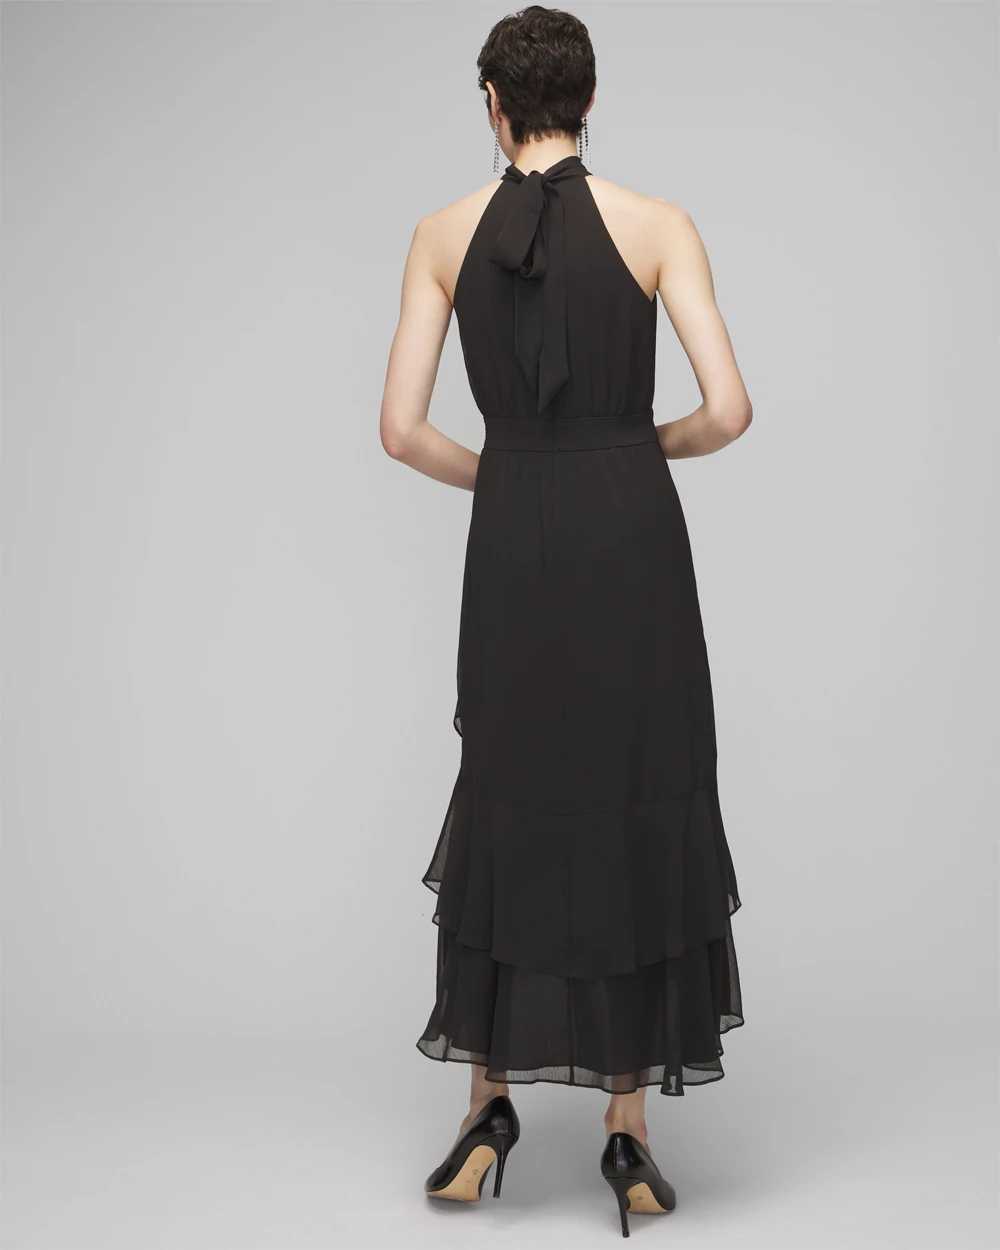 Halter Ruffle Blouson Midi Dress click to view larger image.